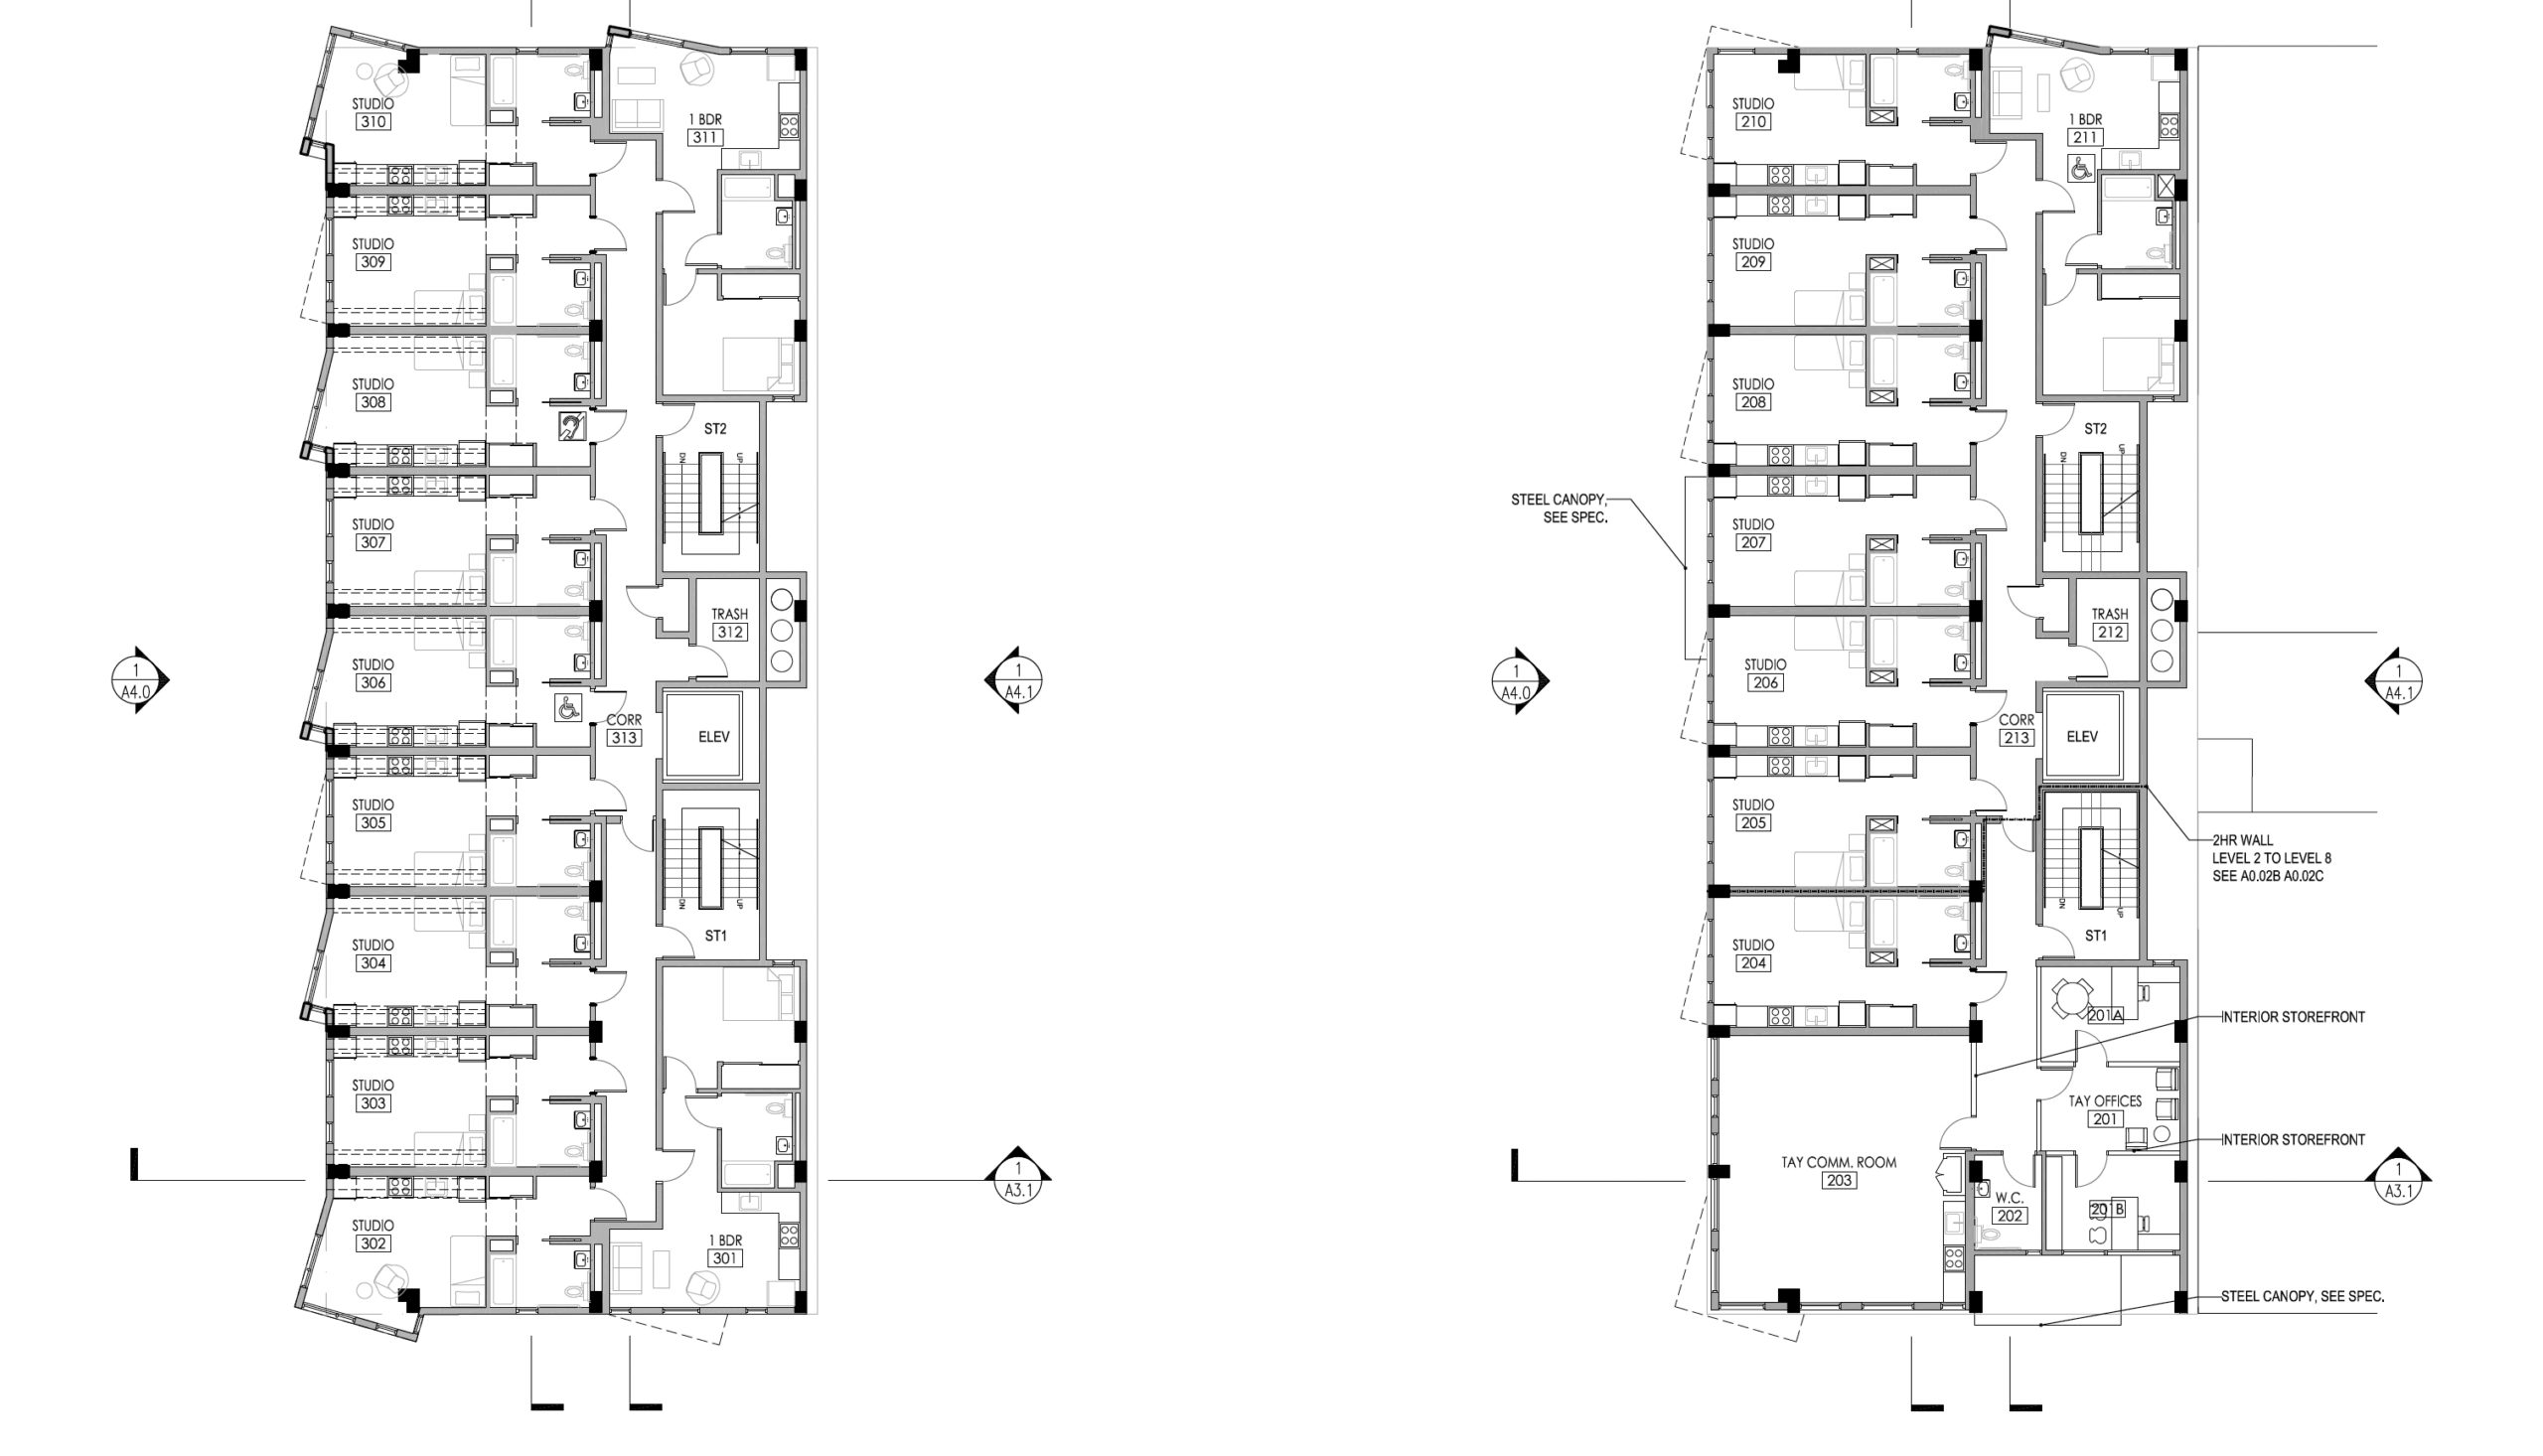 78 Haight Street floor plans, illustration by Paulett Taggart Architects